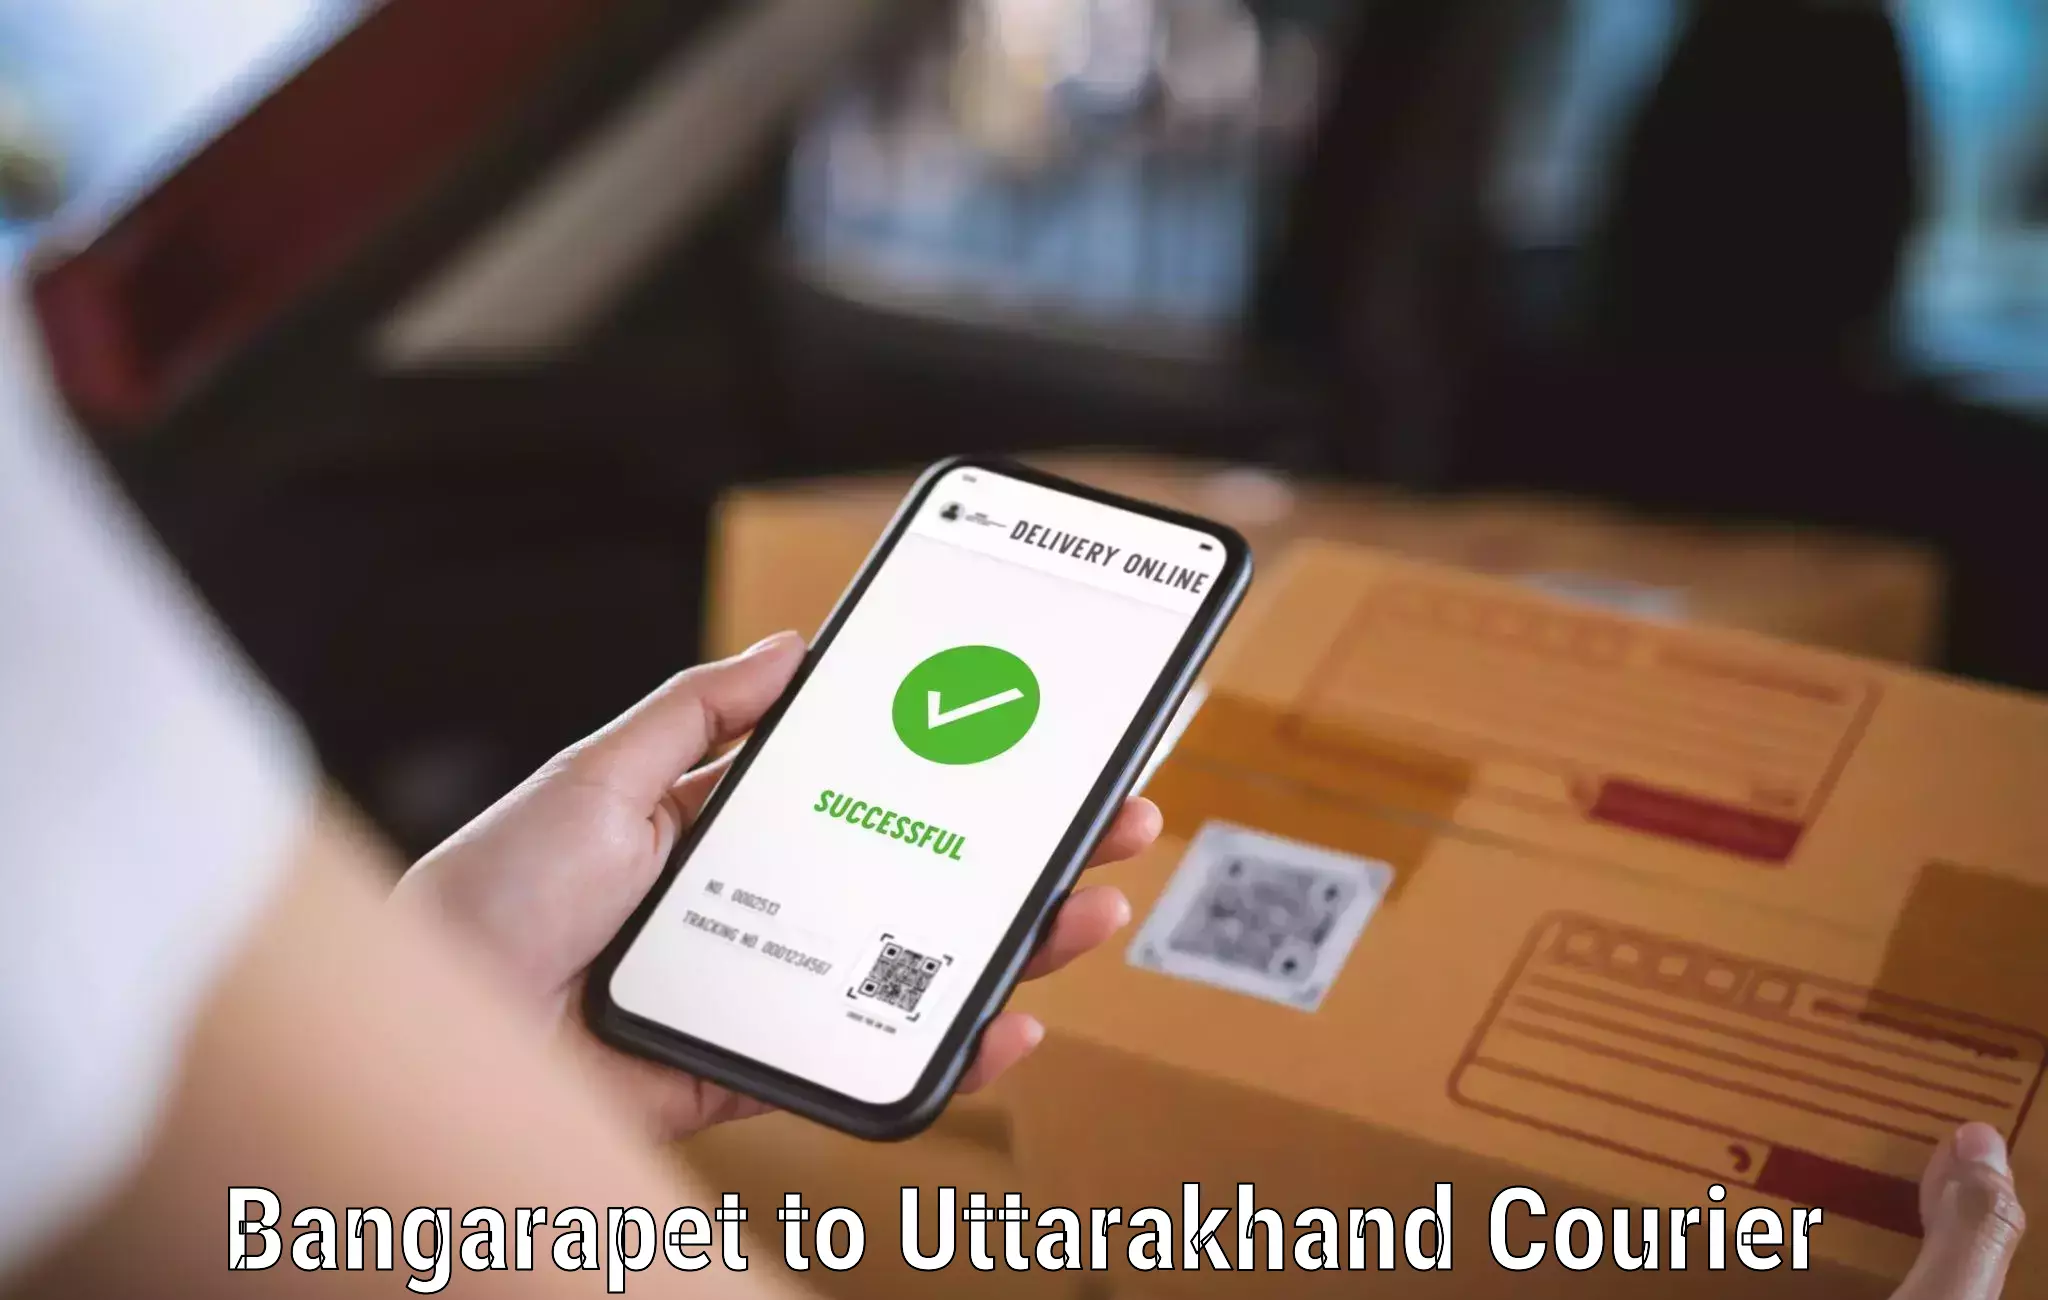 Automated parcel services Bangarapet to Rishikesh